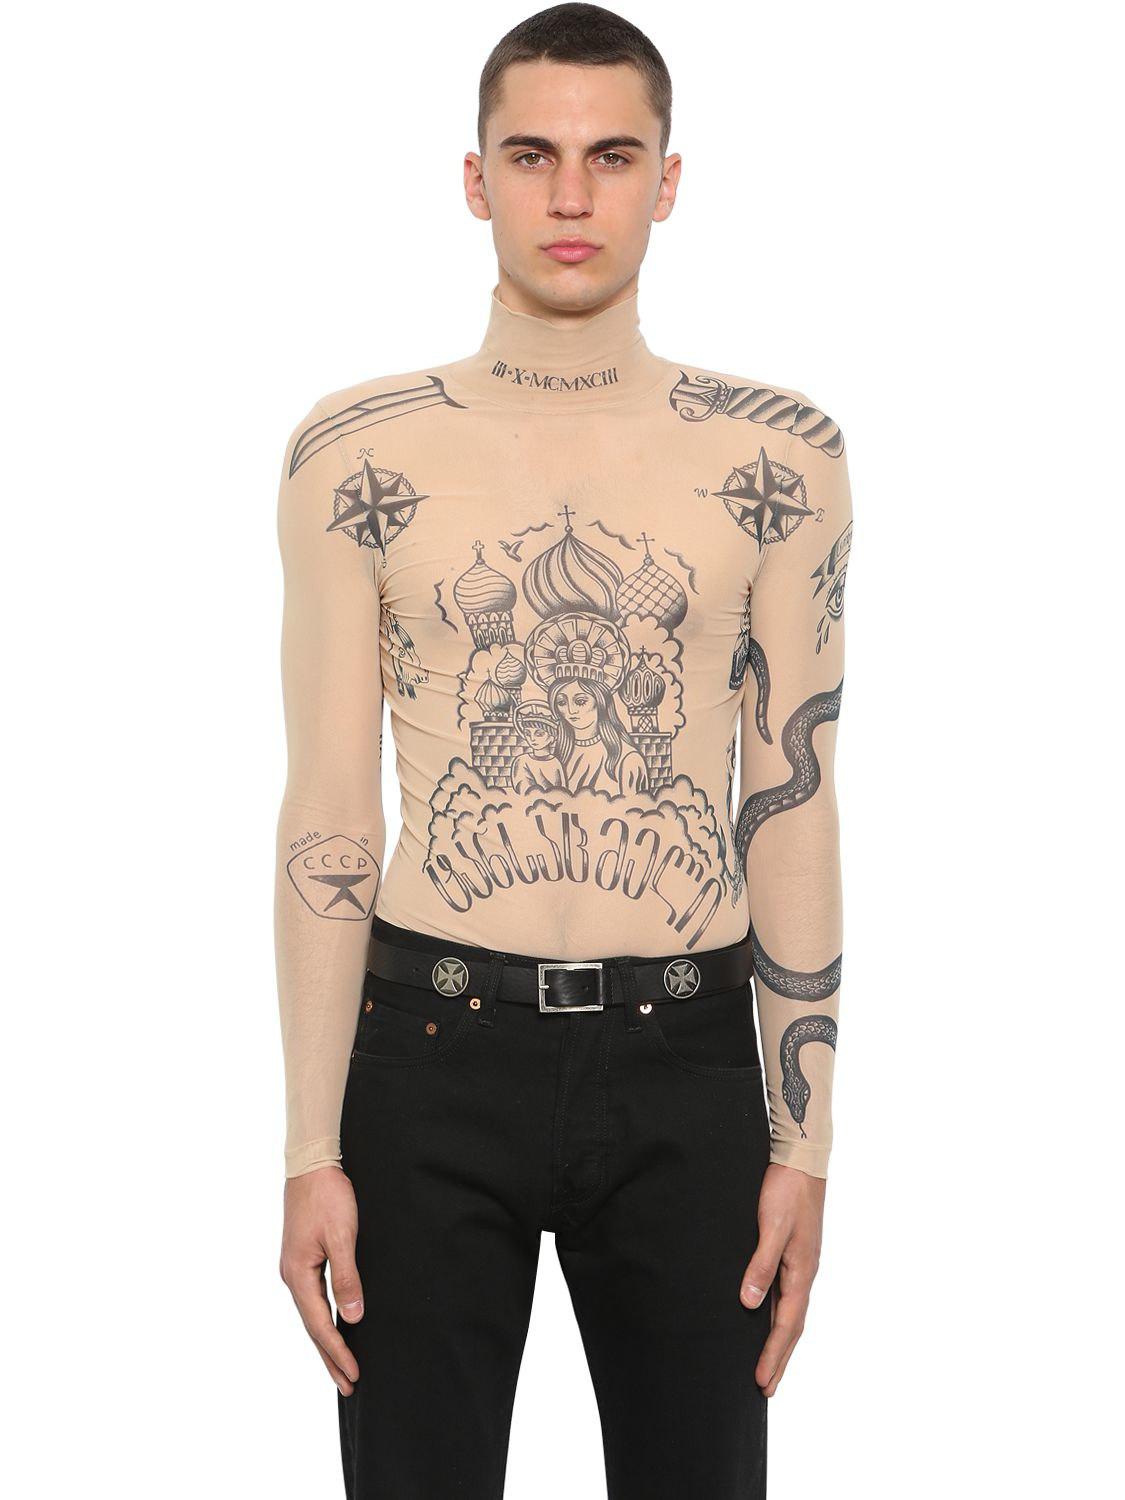 Tattoo print clothing